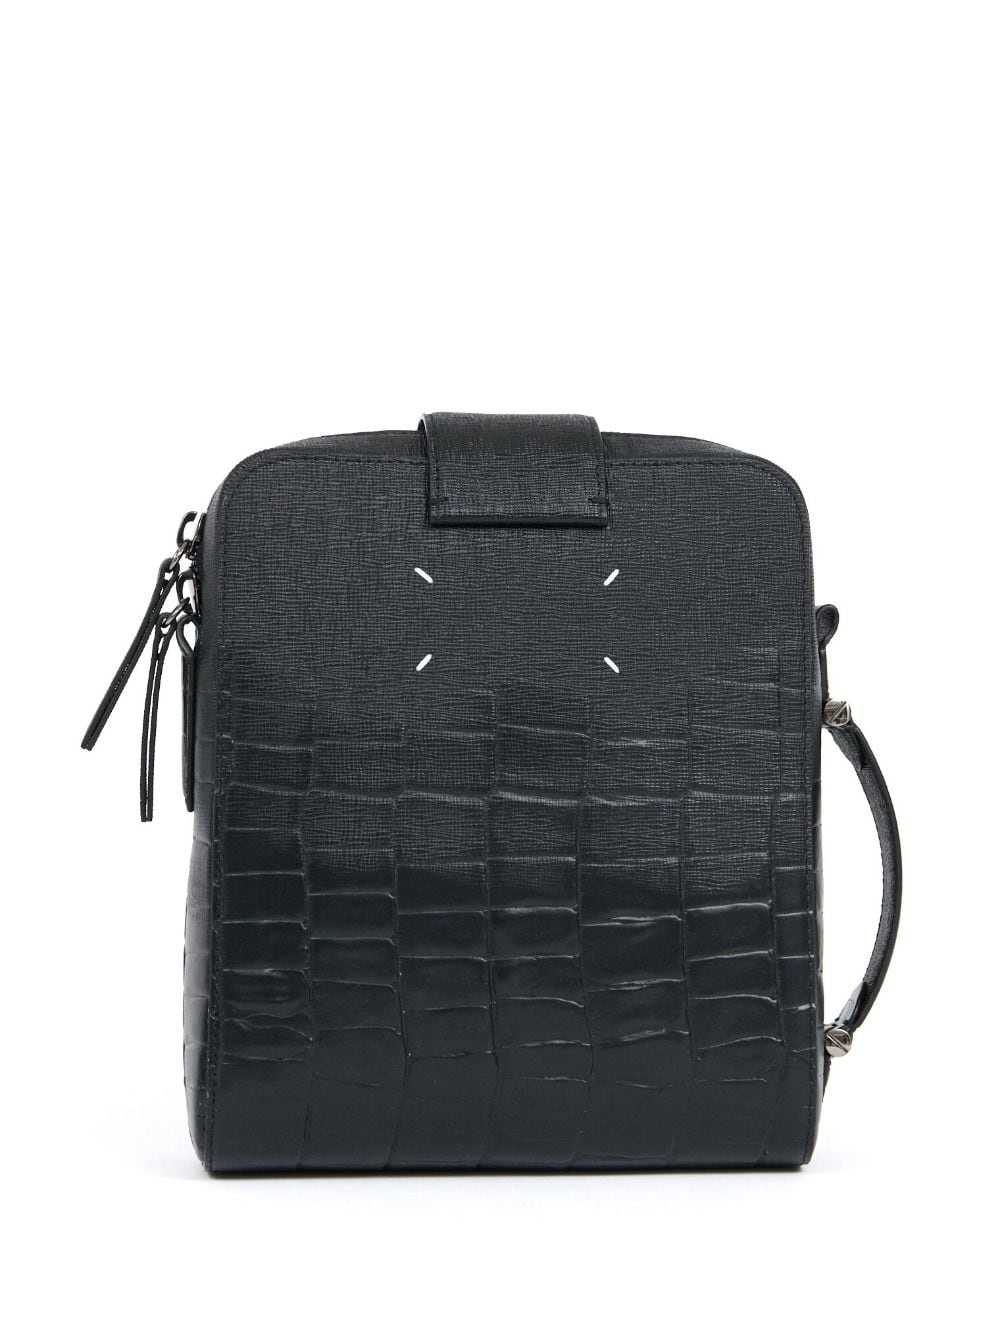 four-stitch leather shoulder bag - 4